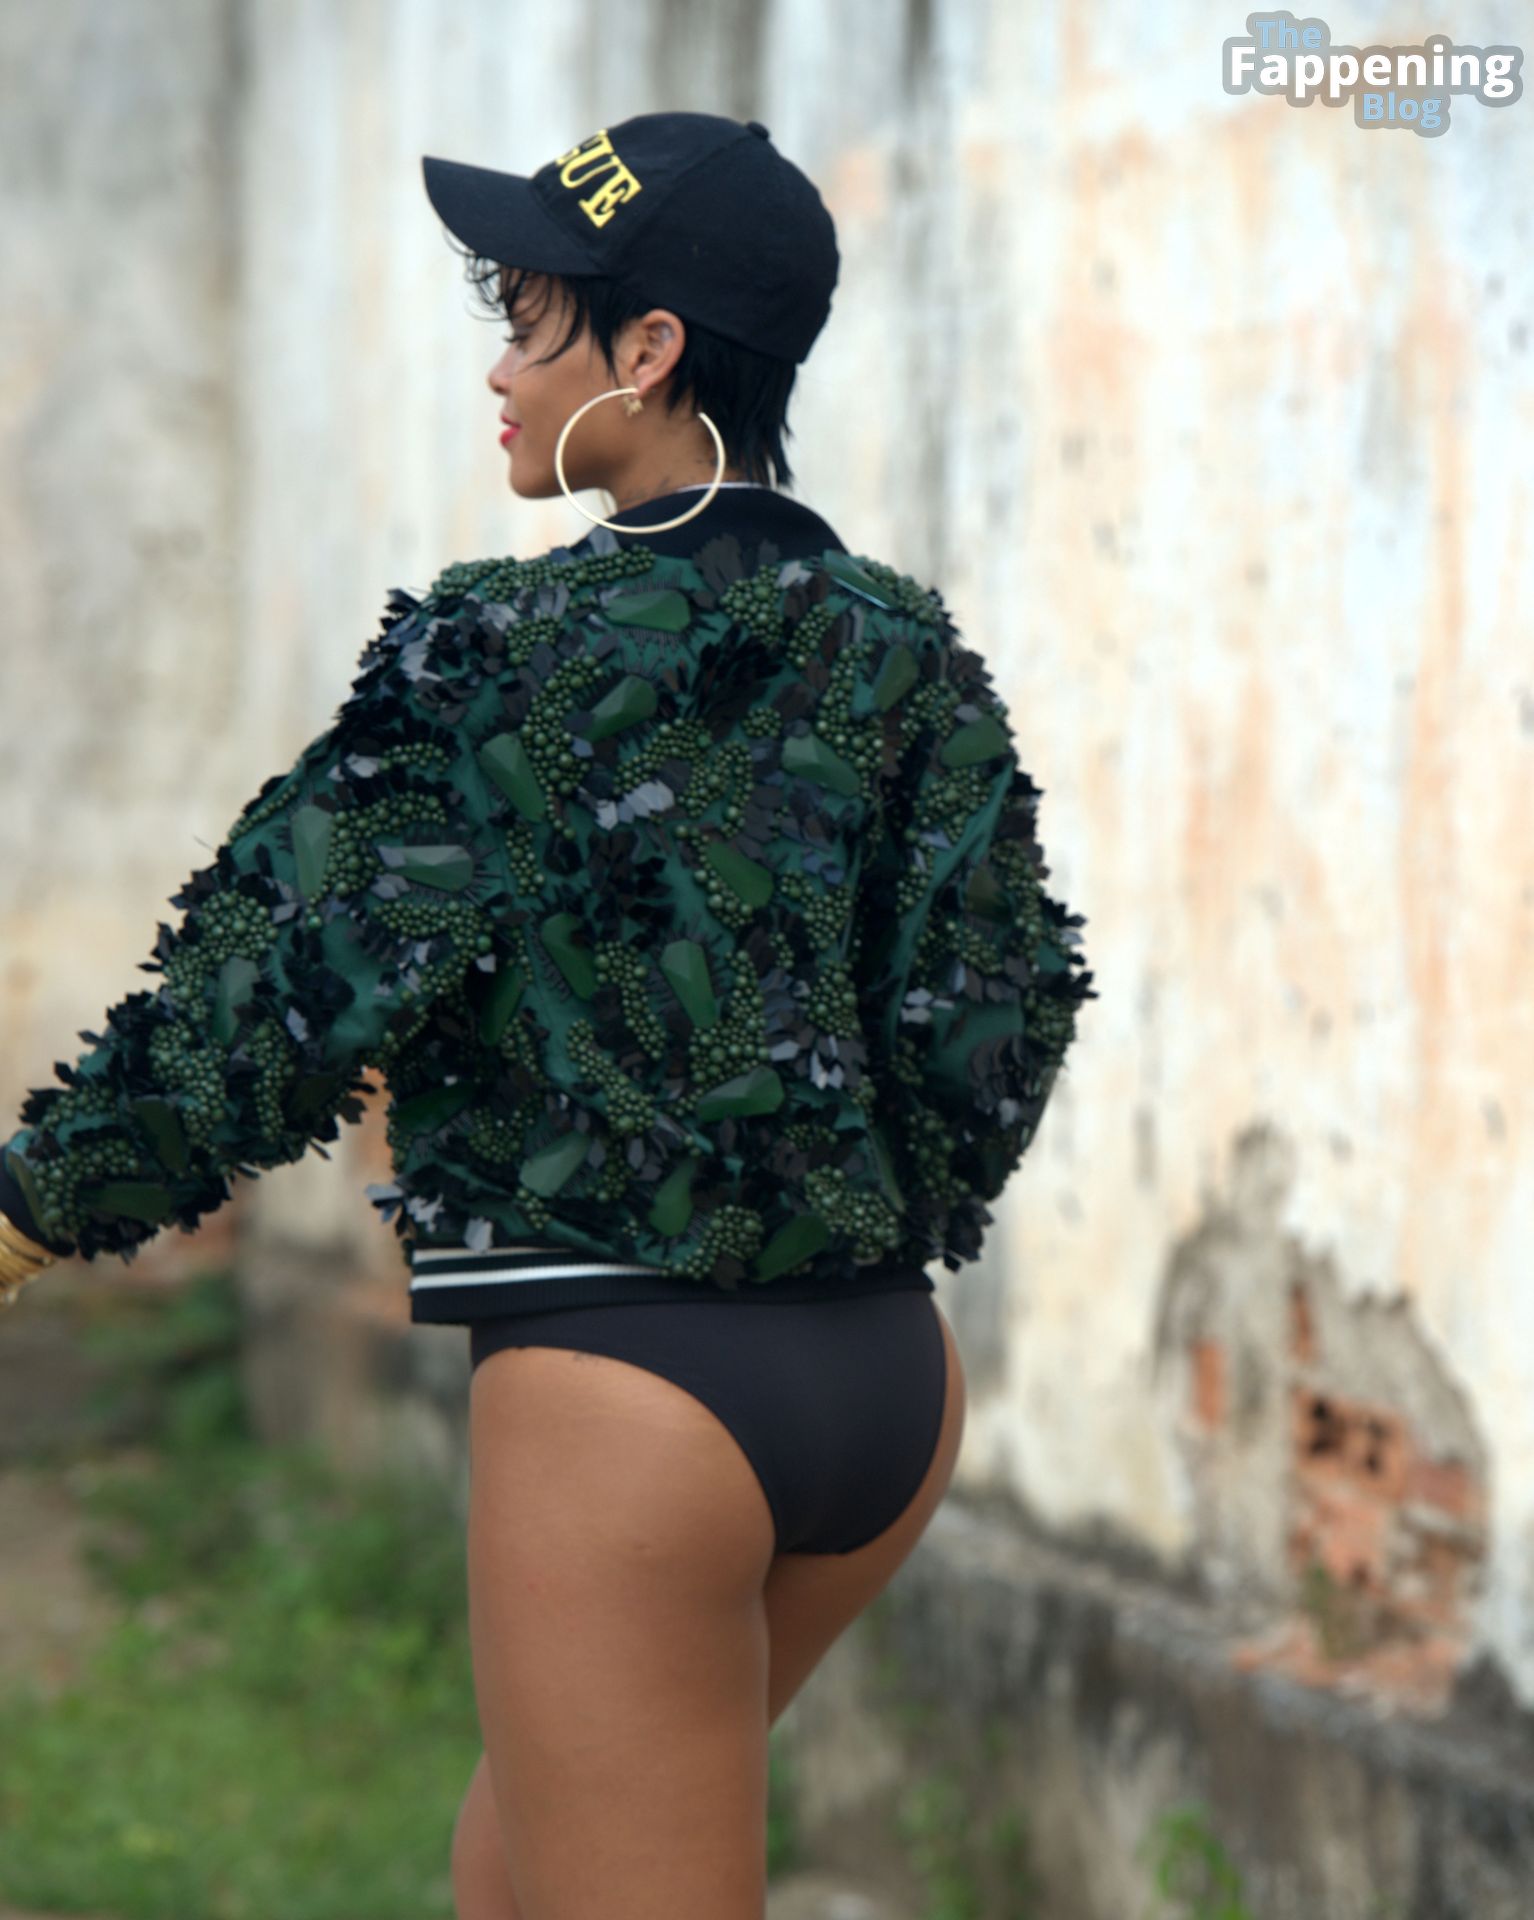 Rihanna-Nude-Sexy-33-The-Fappening-Blog.jpg